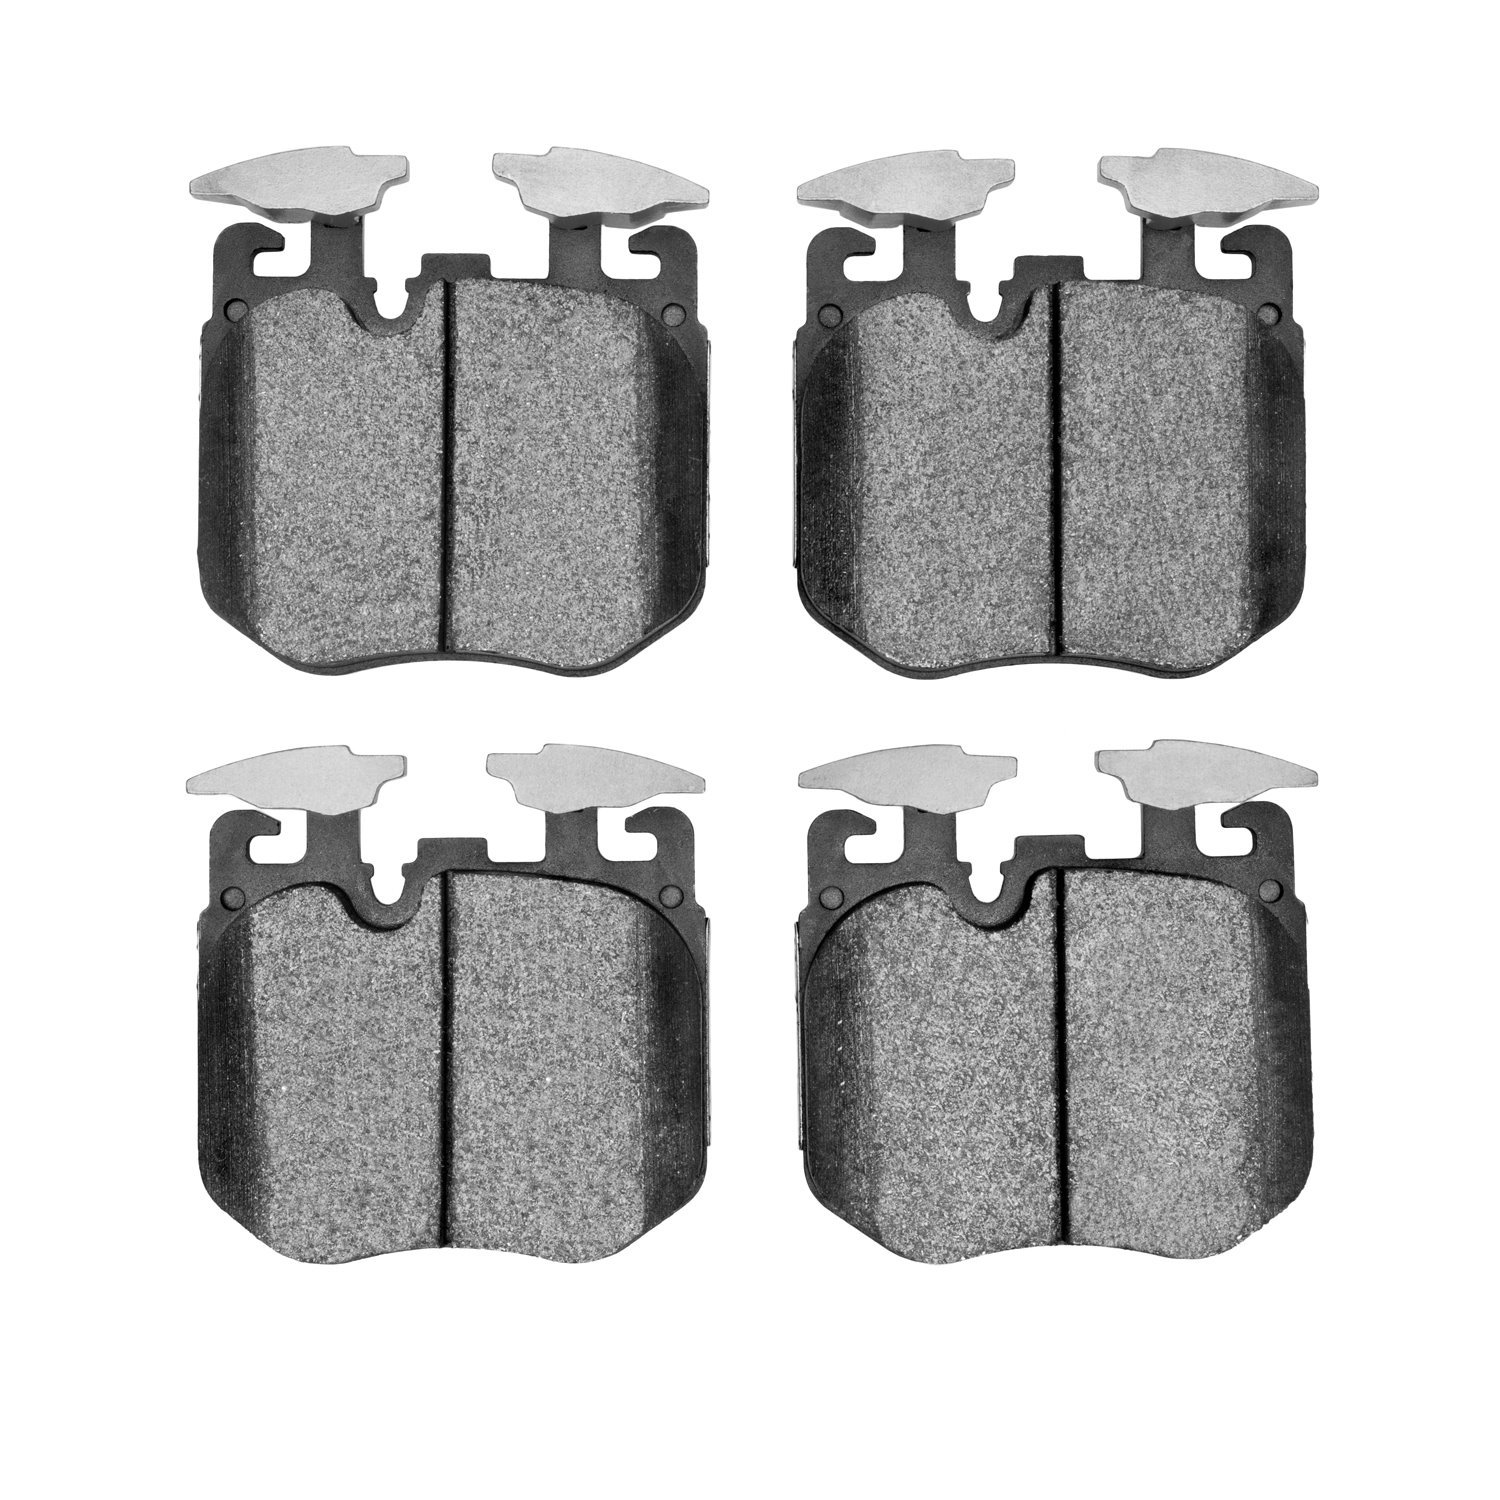 1600-1868-00 5000 Euro Ceramic Brake Pads, Fits Select Multiple Makes/Models, Position: Front